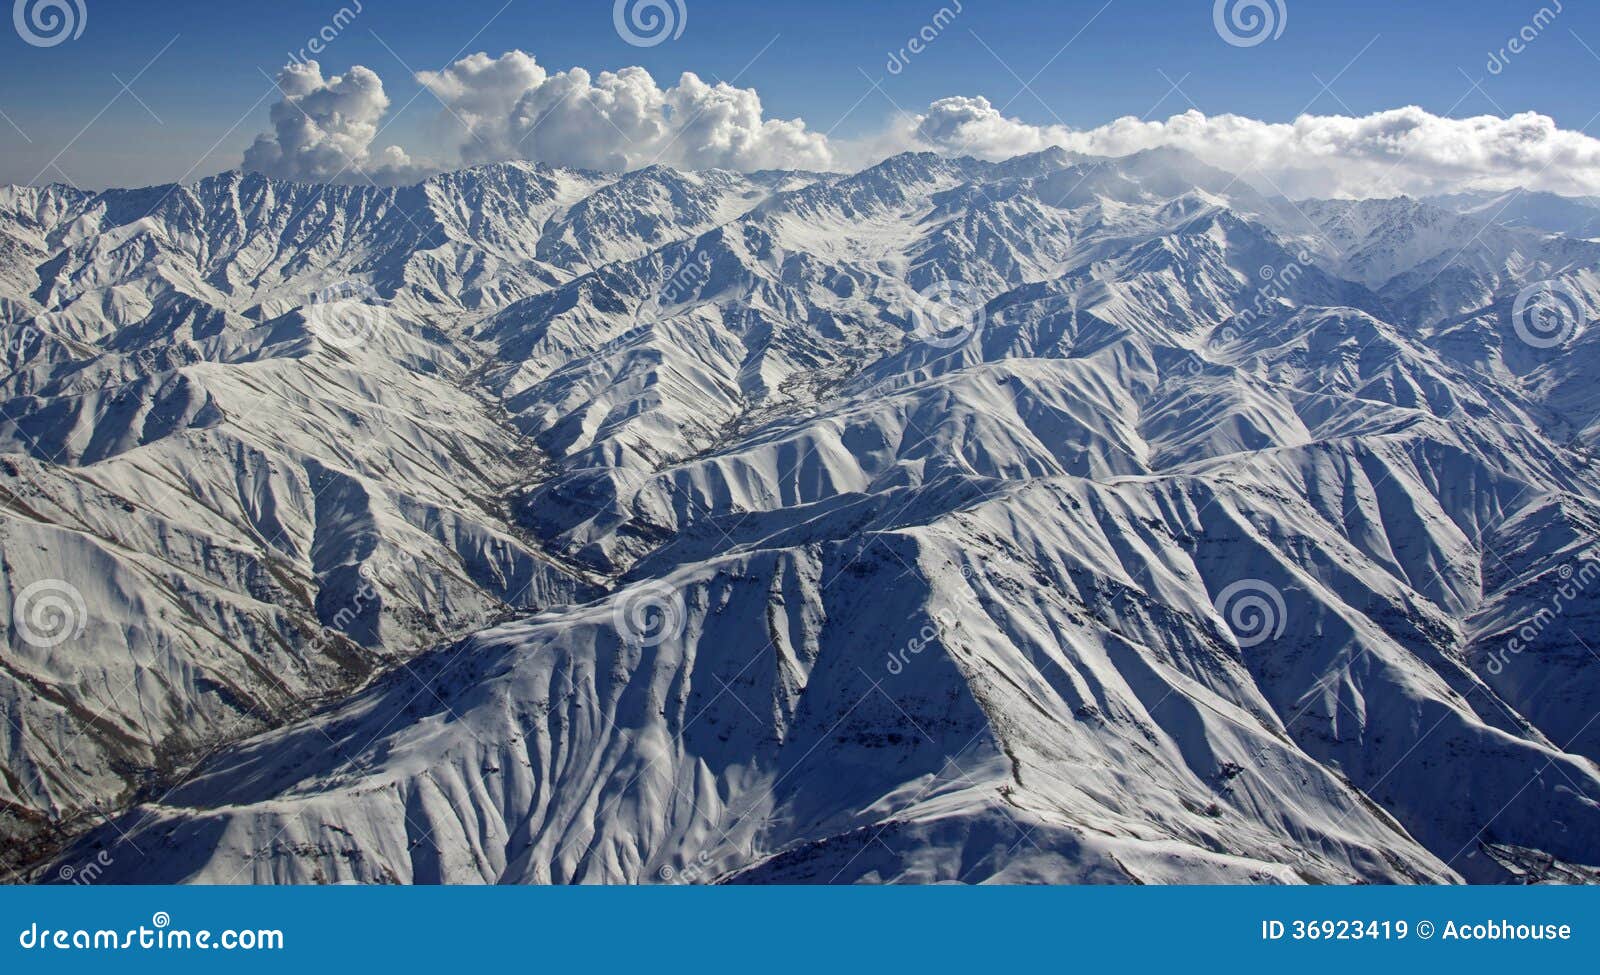 rugged afghanistan mountain range